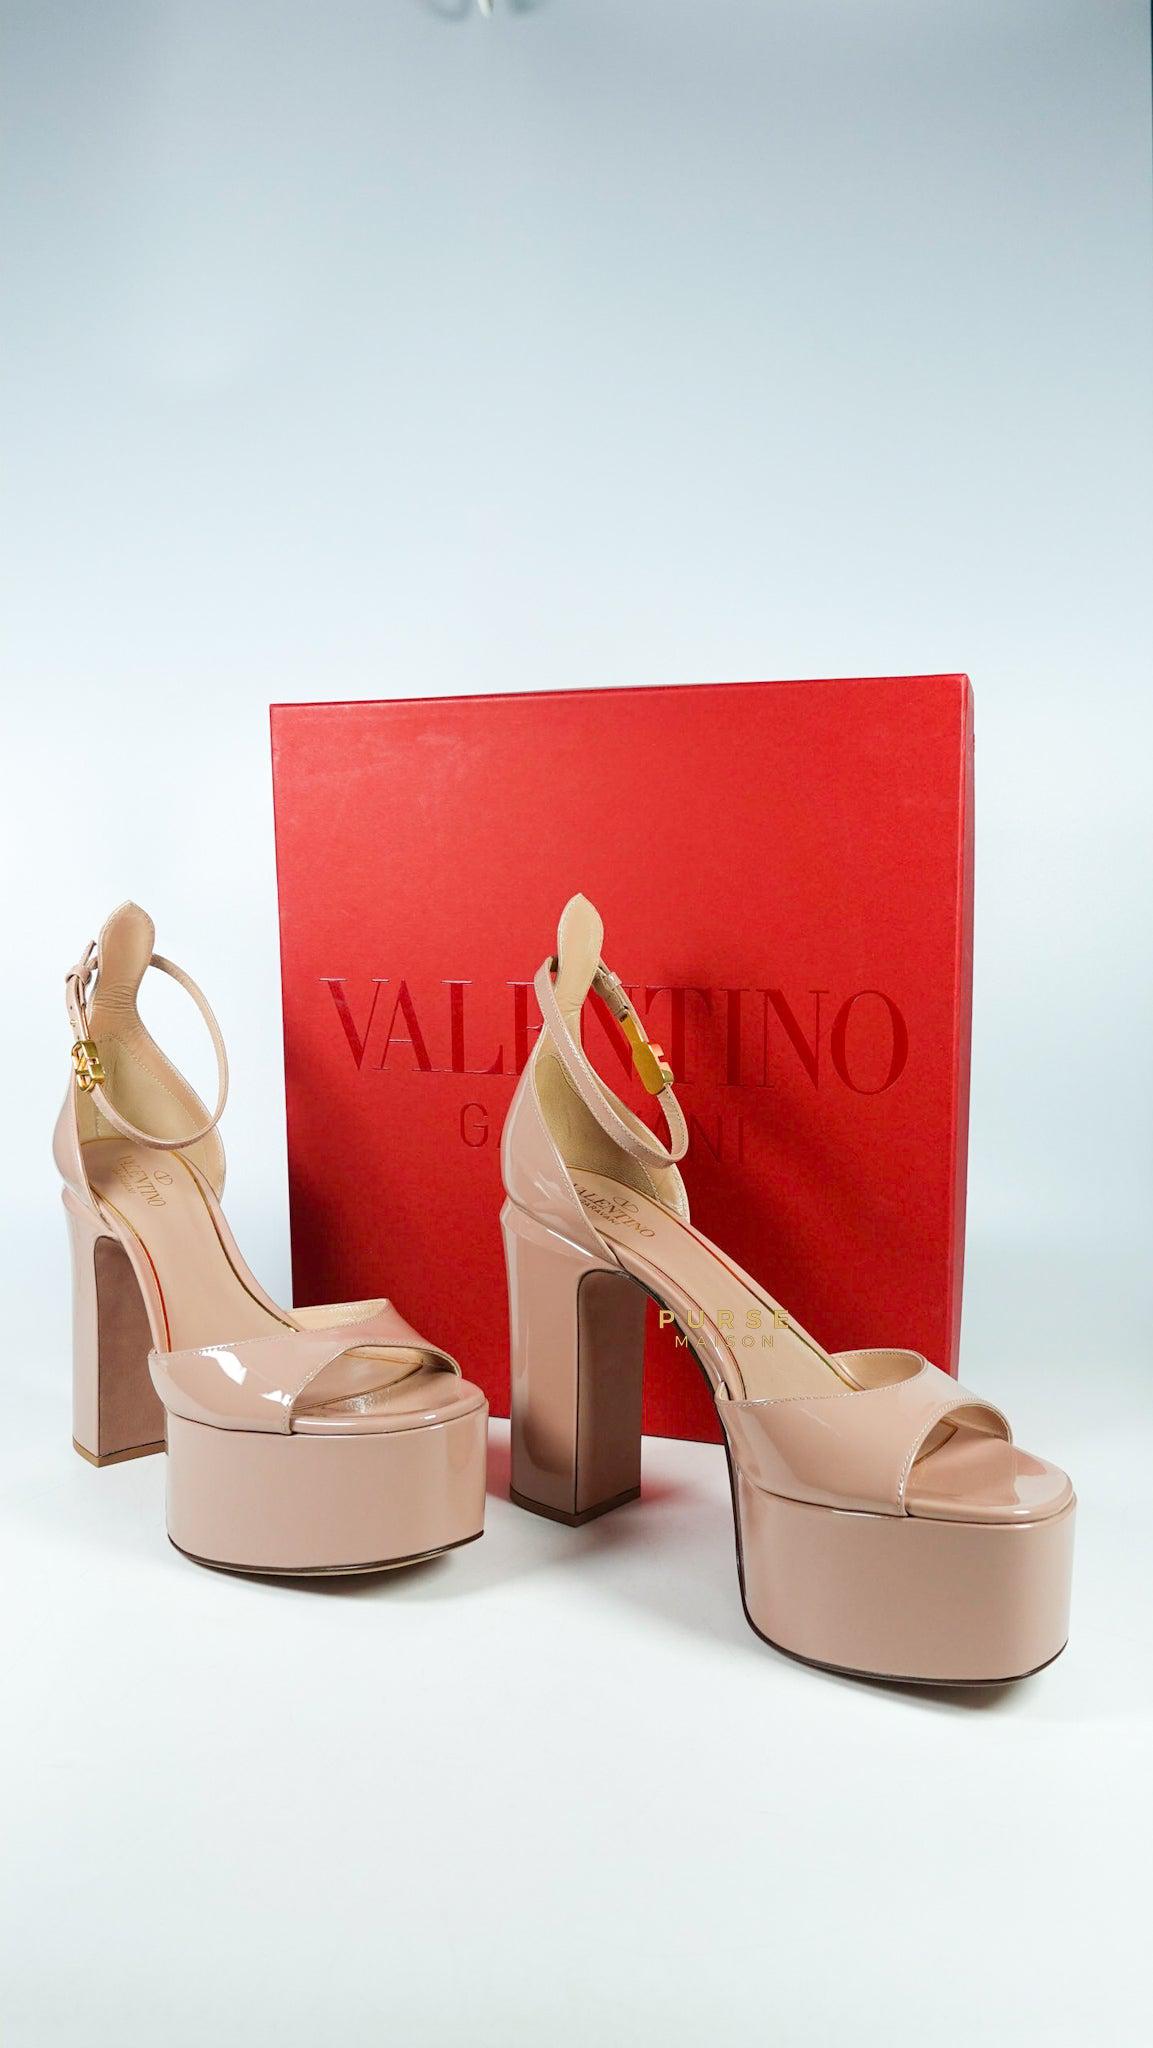 Valentino Garavani Tan-Go Platform Nude Patent Leather Sandals (Size 39 EUR, 25.5cm)